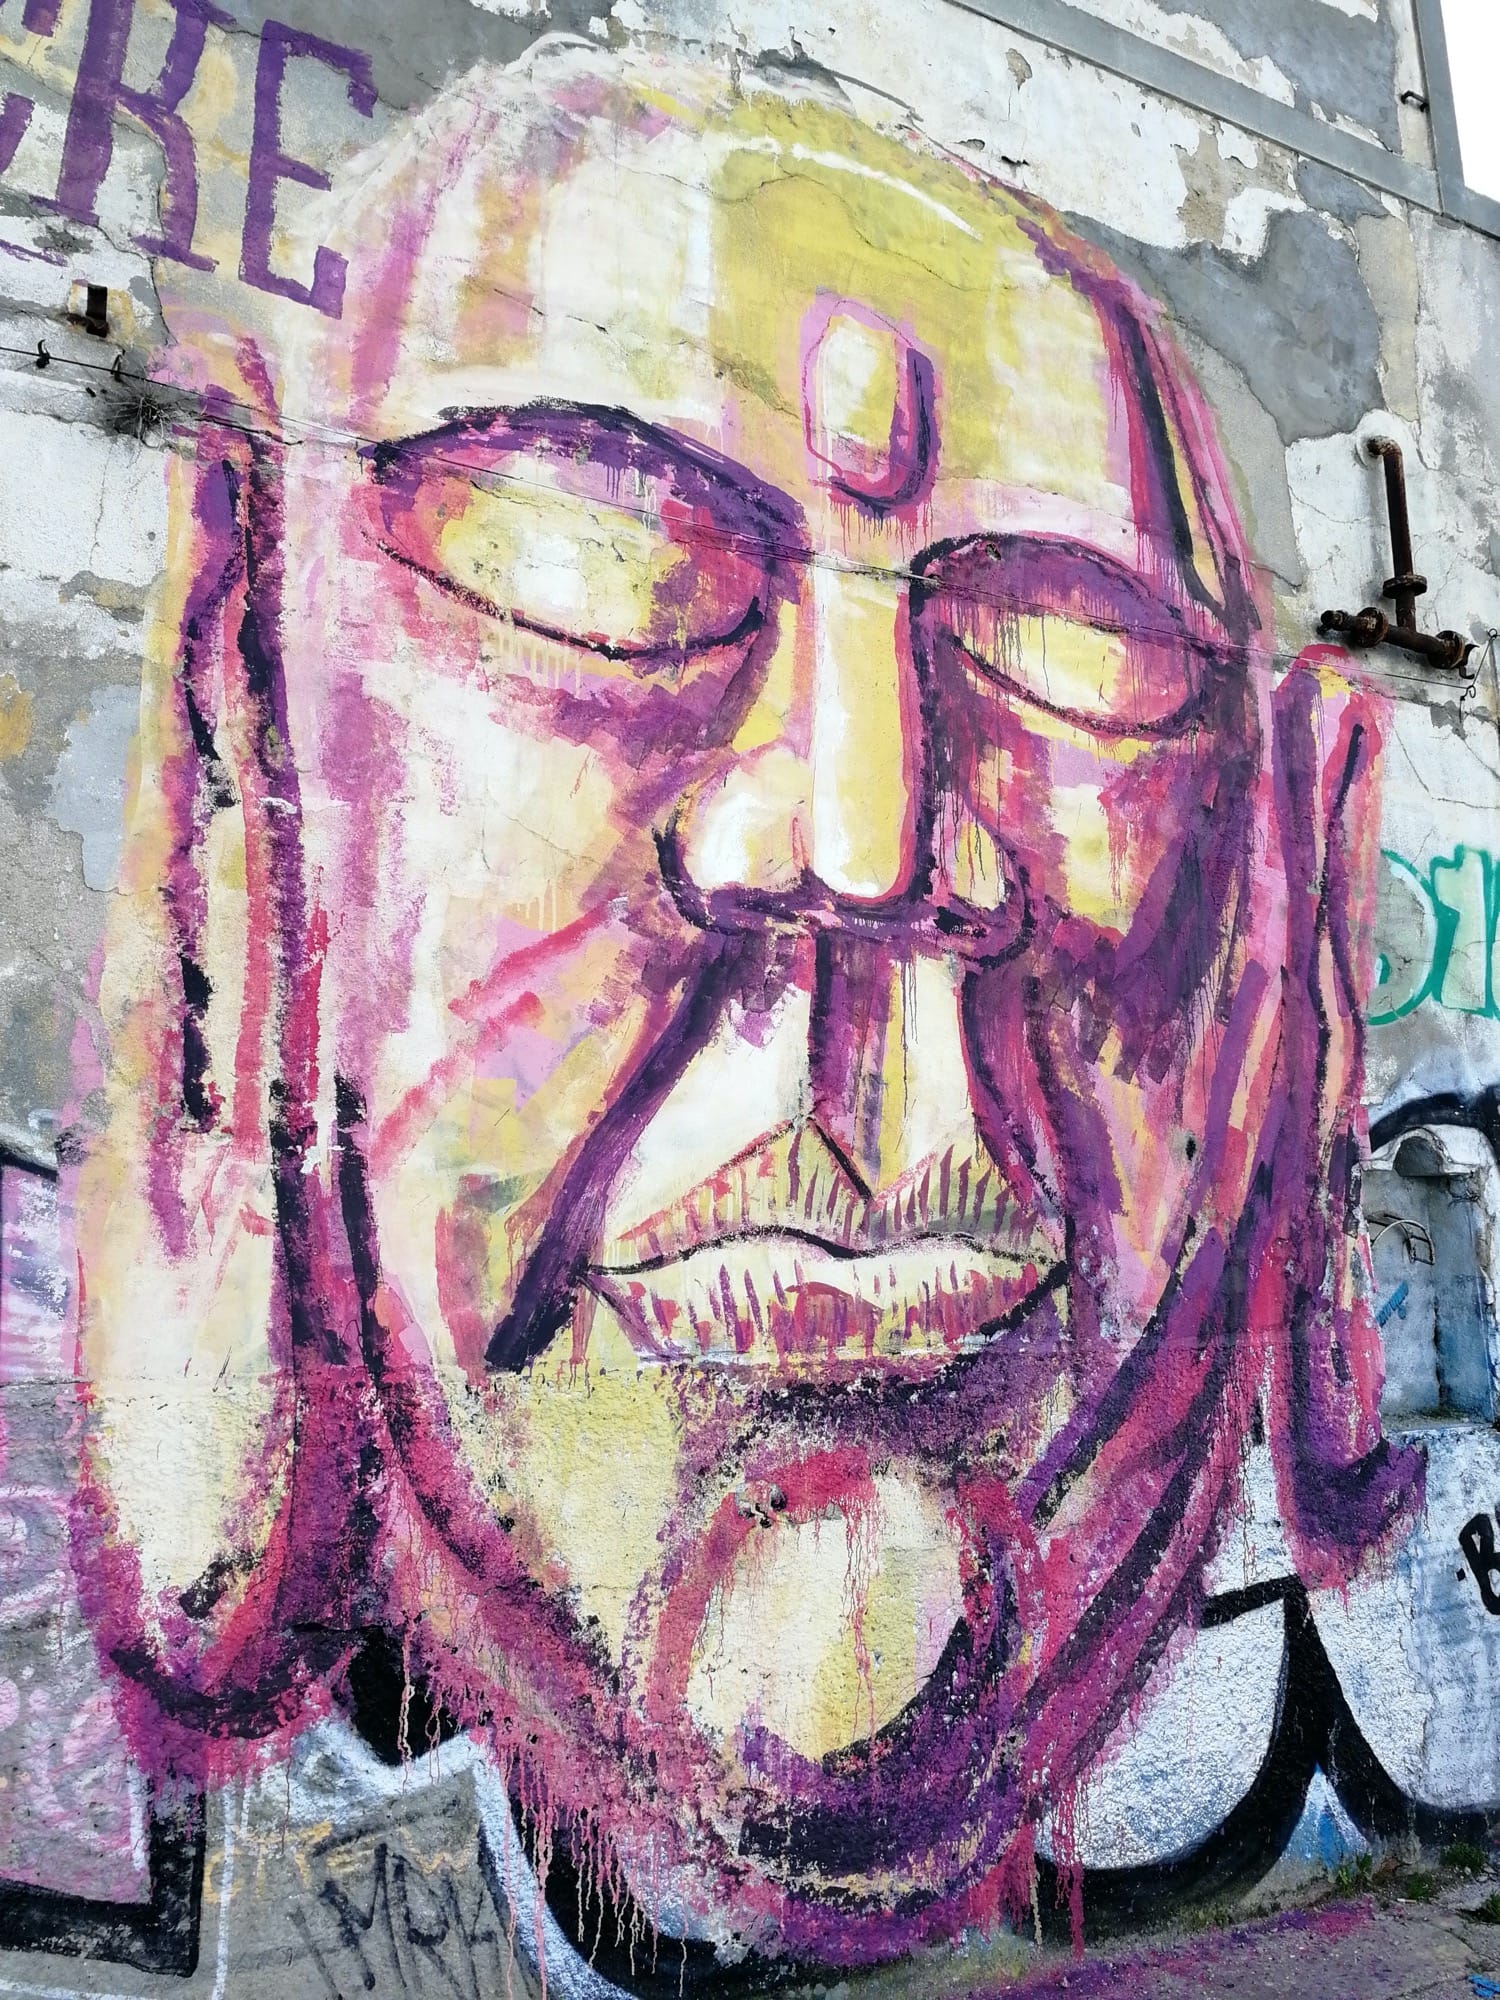 Graffiti 1030  captured by Rabot in Lisboa Portugal